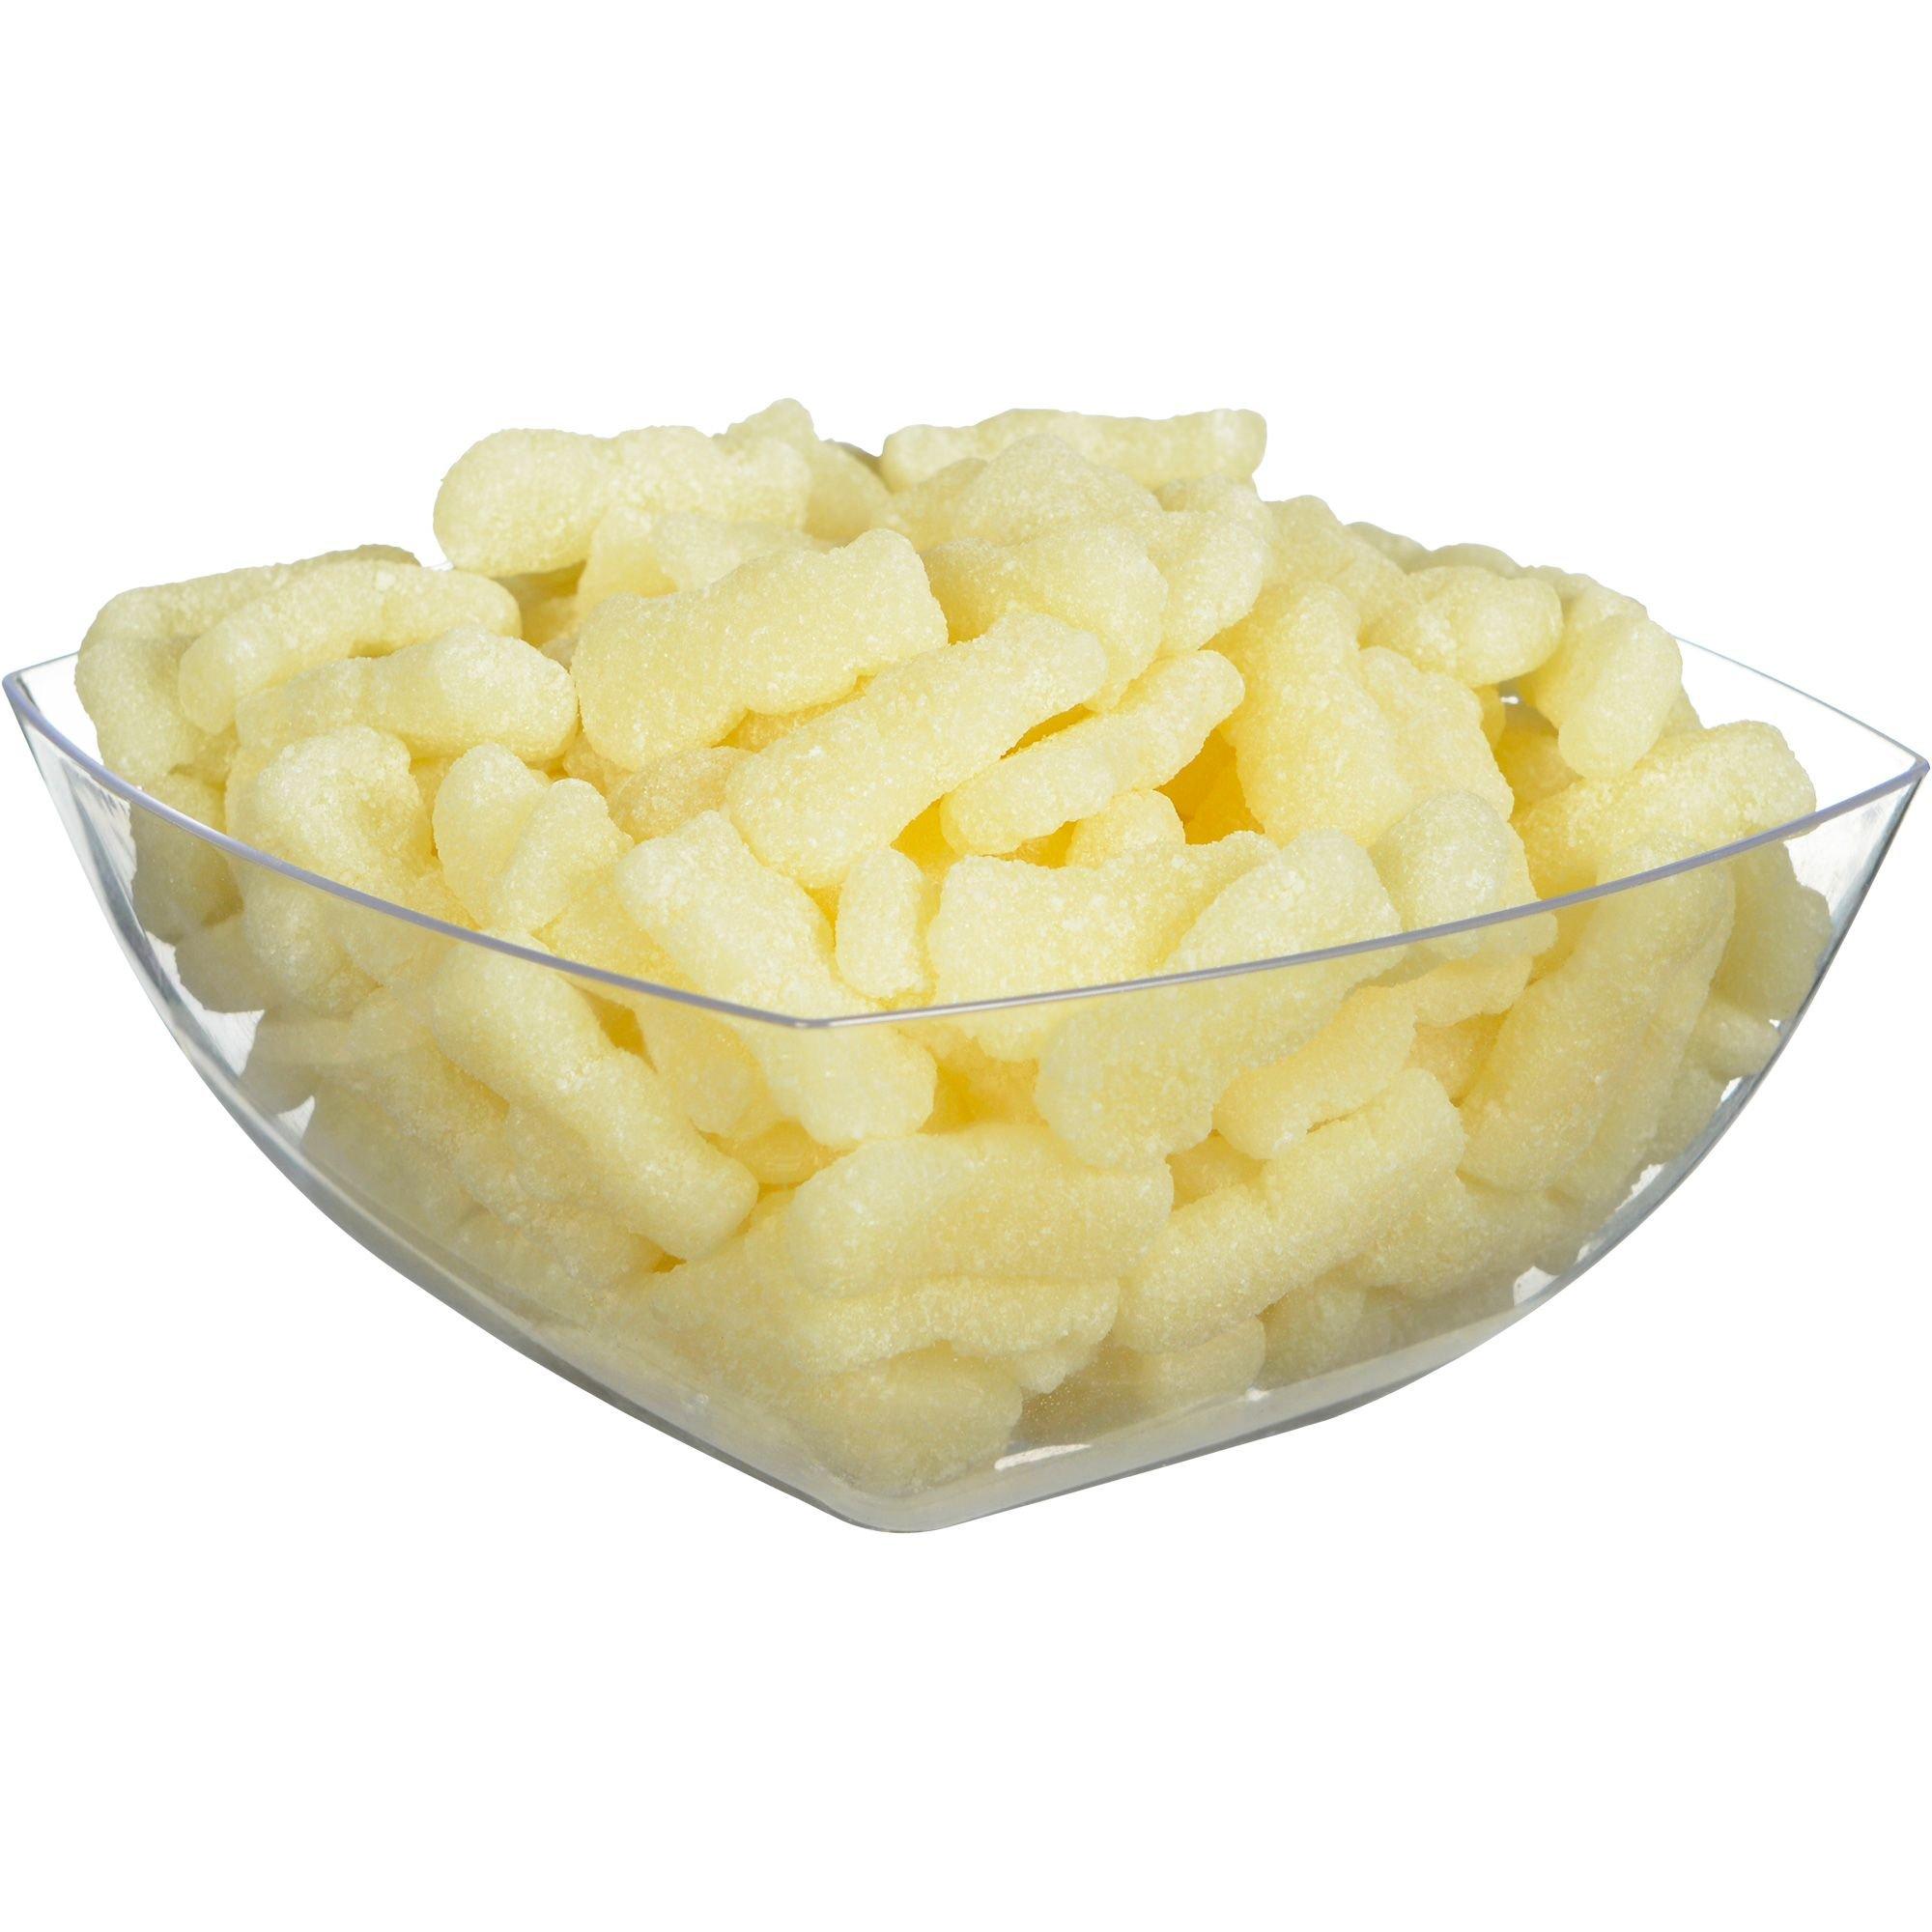 White Sour Patch Kids, 16oz - Pineapple Flavor